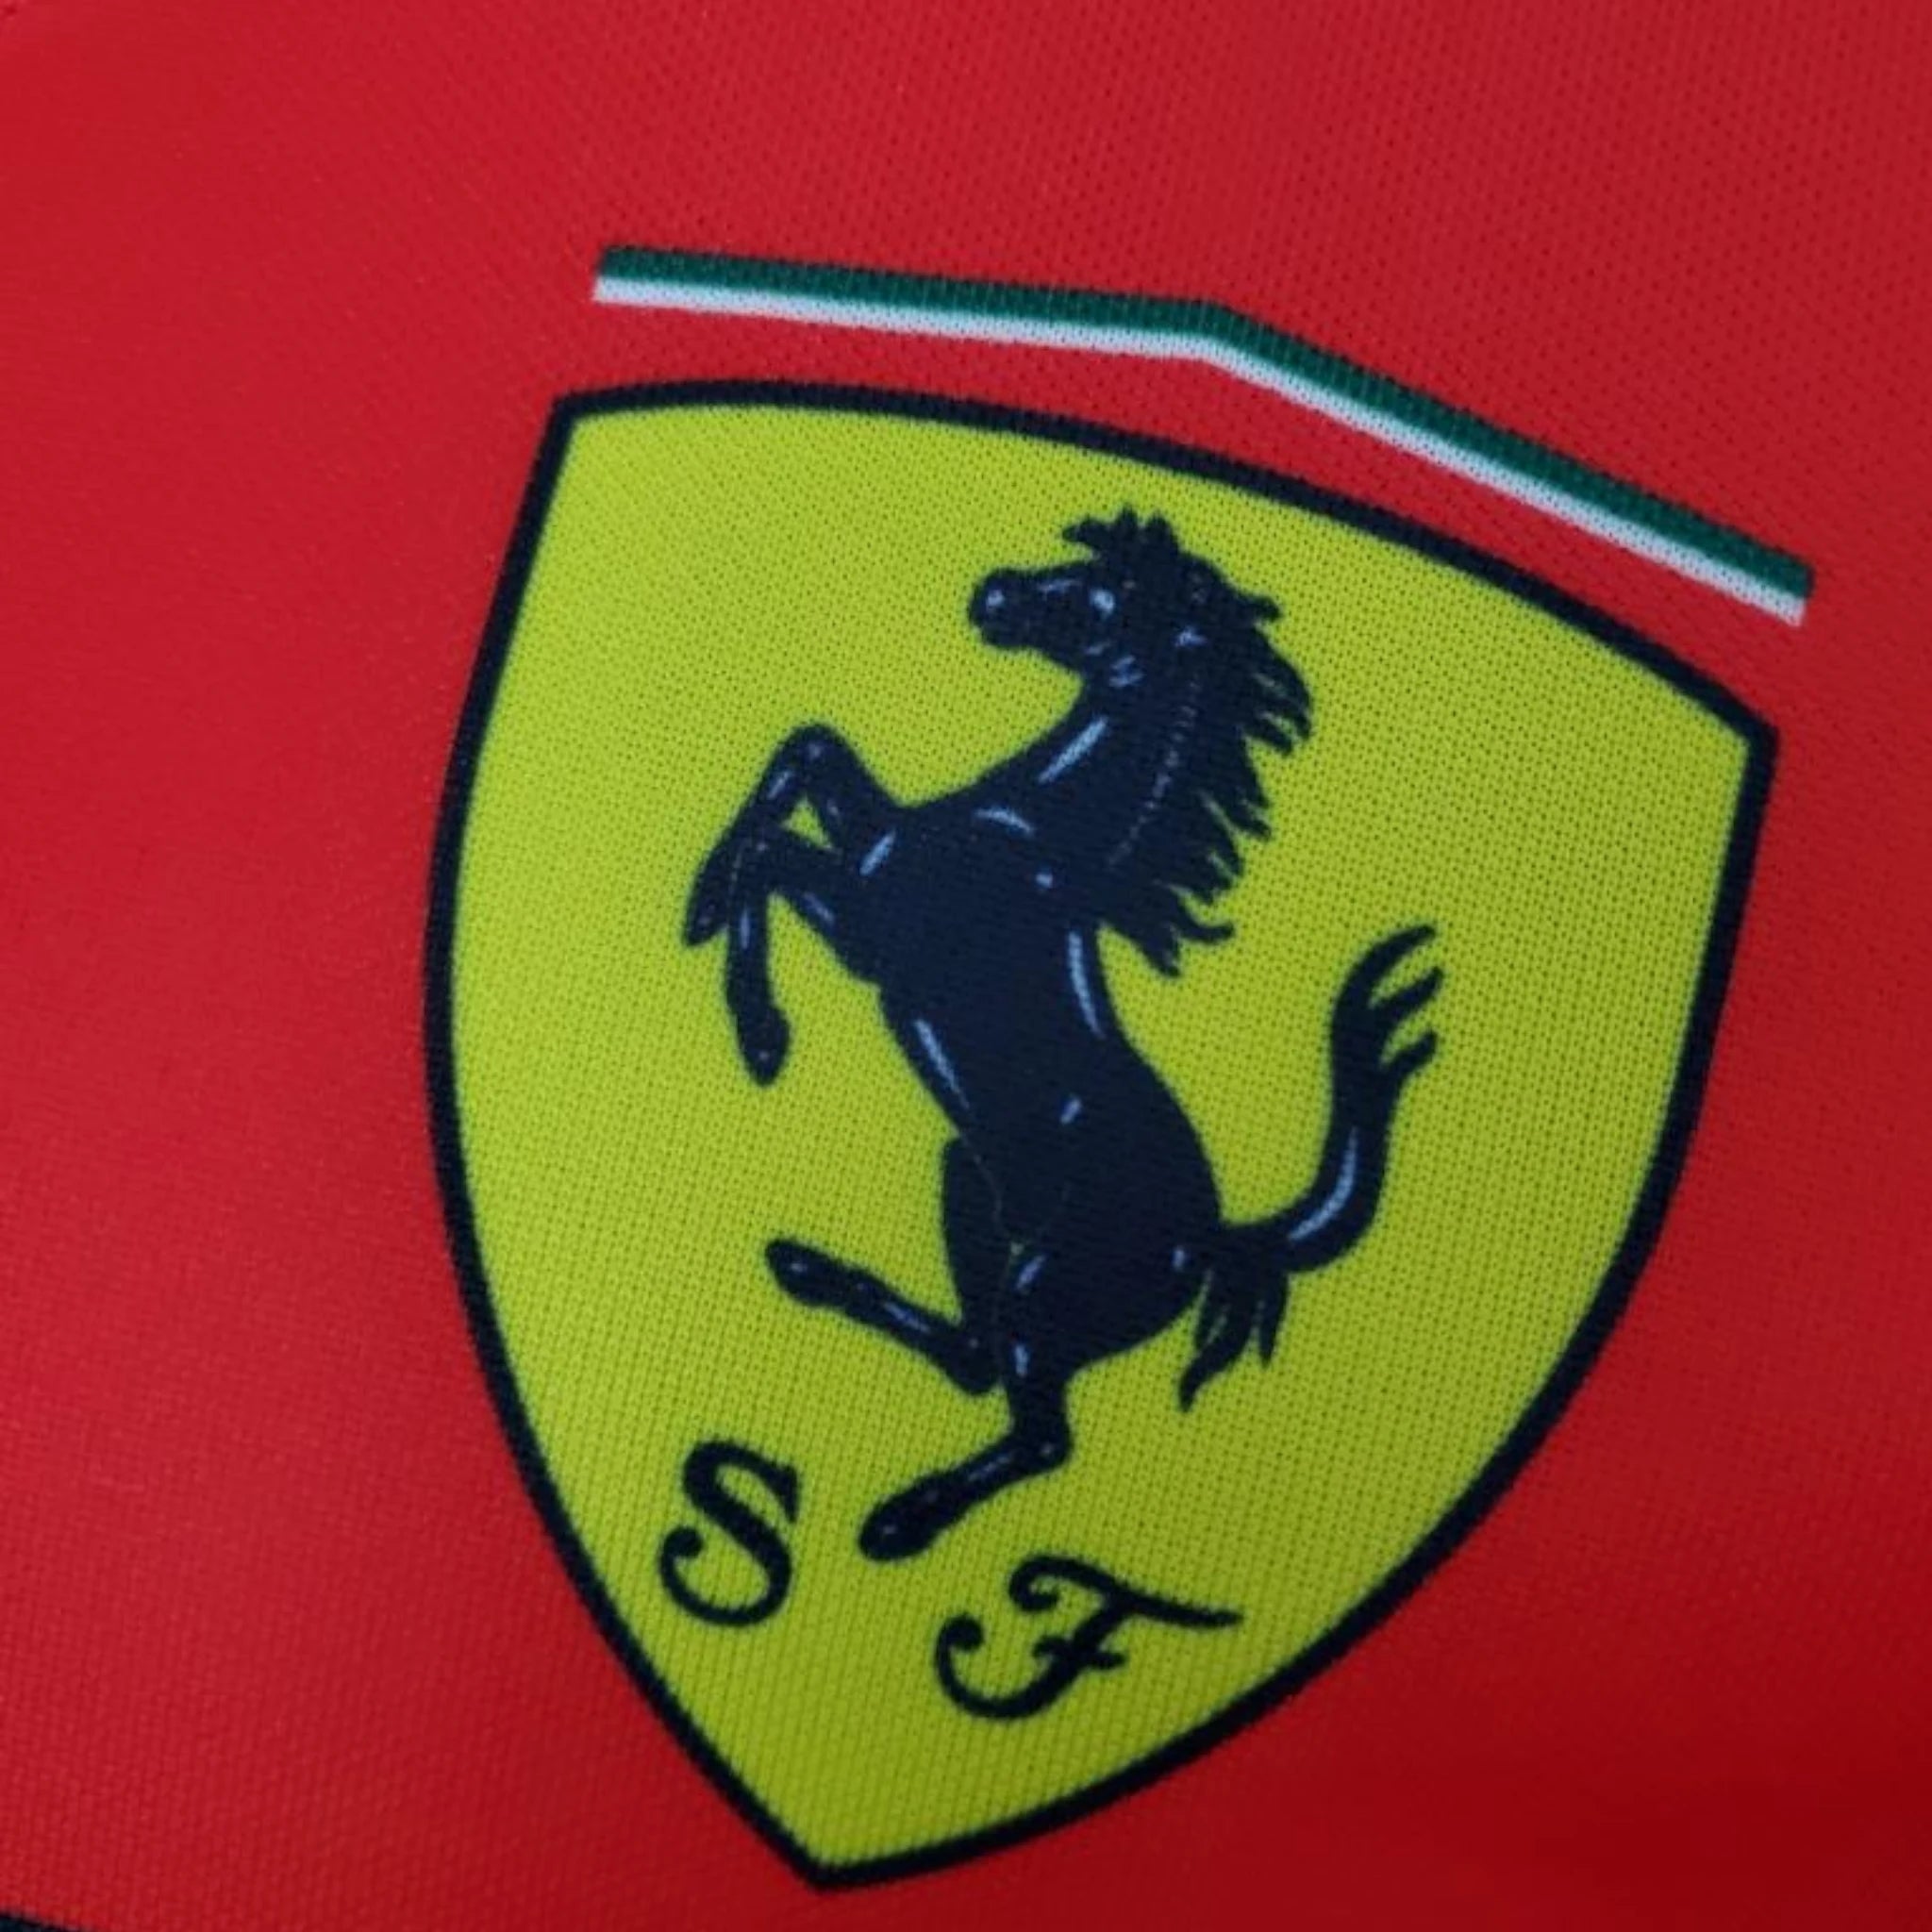 2022 New Ferrari Charles Leclecr F1 Racing T-Shirt